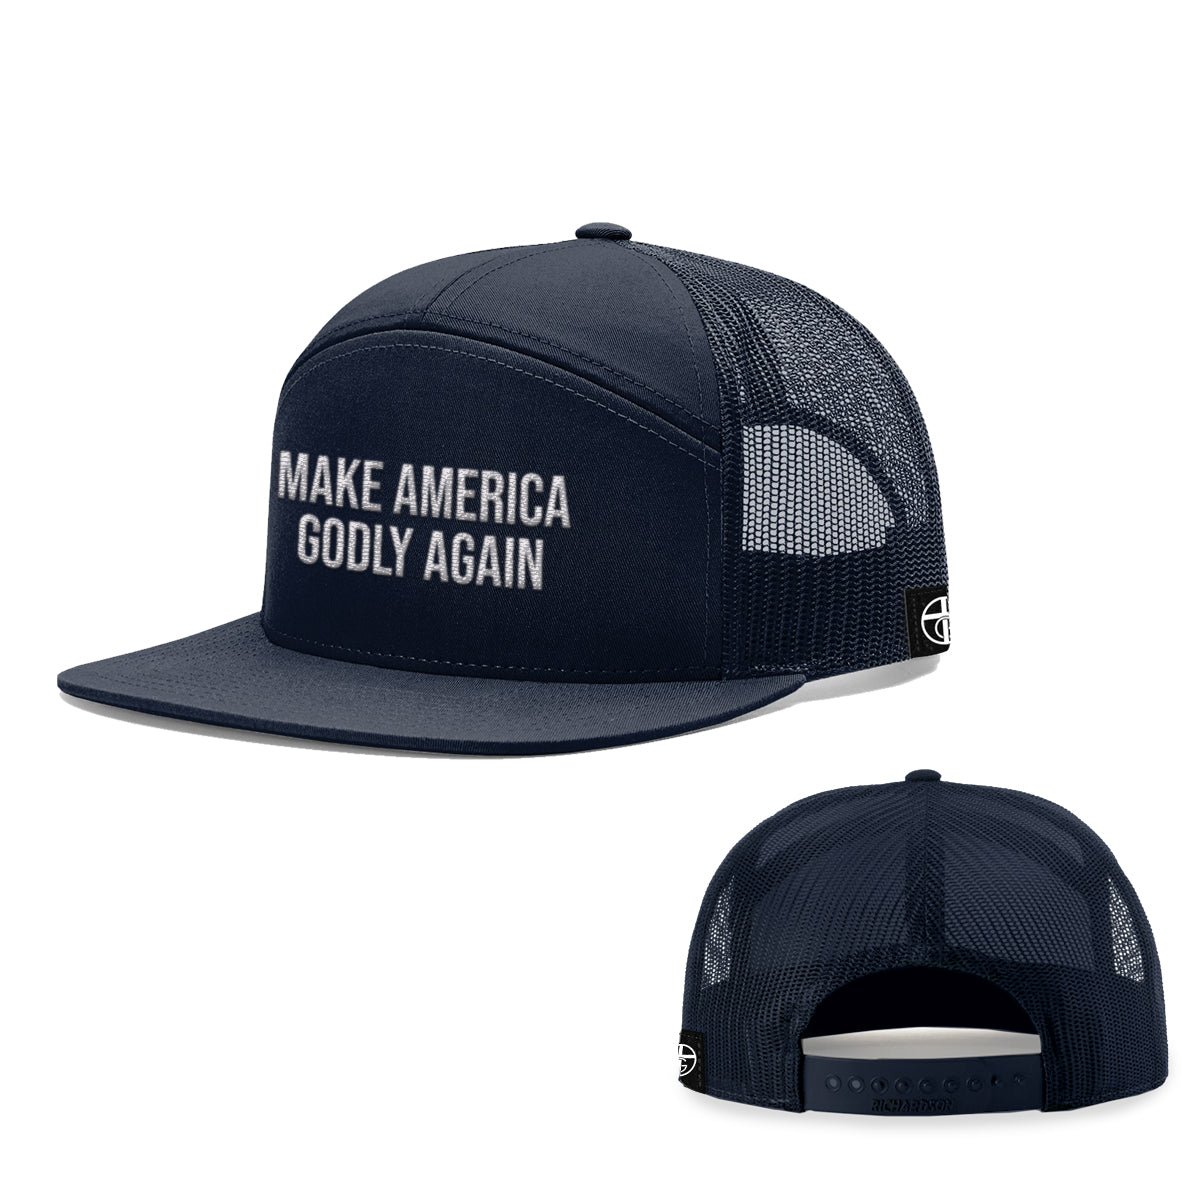 Make America Godly Again 7 Panel Hats